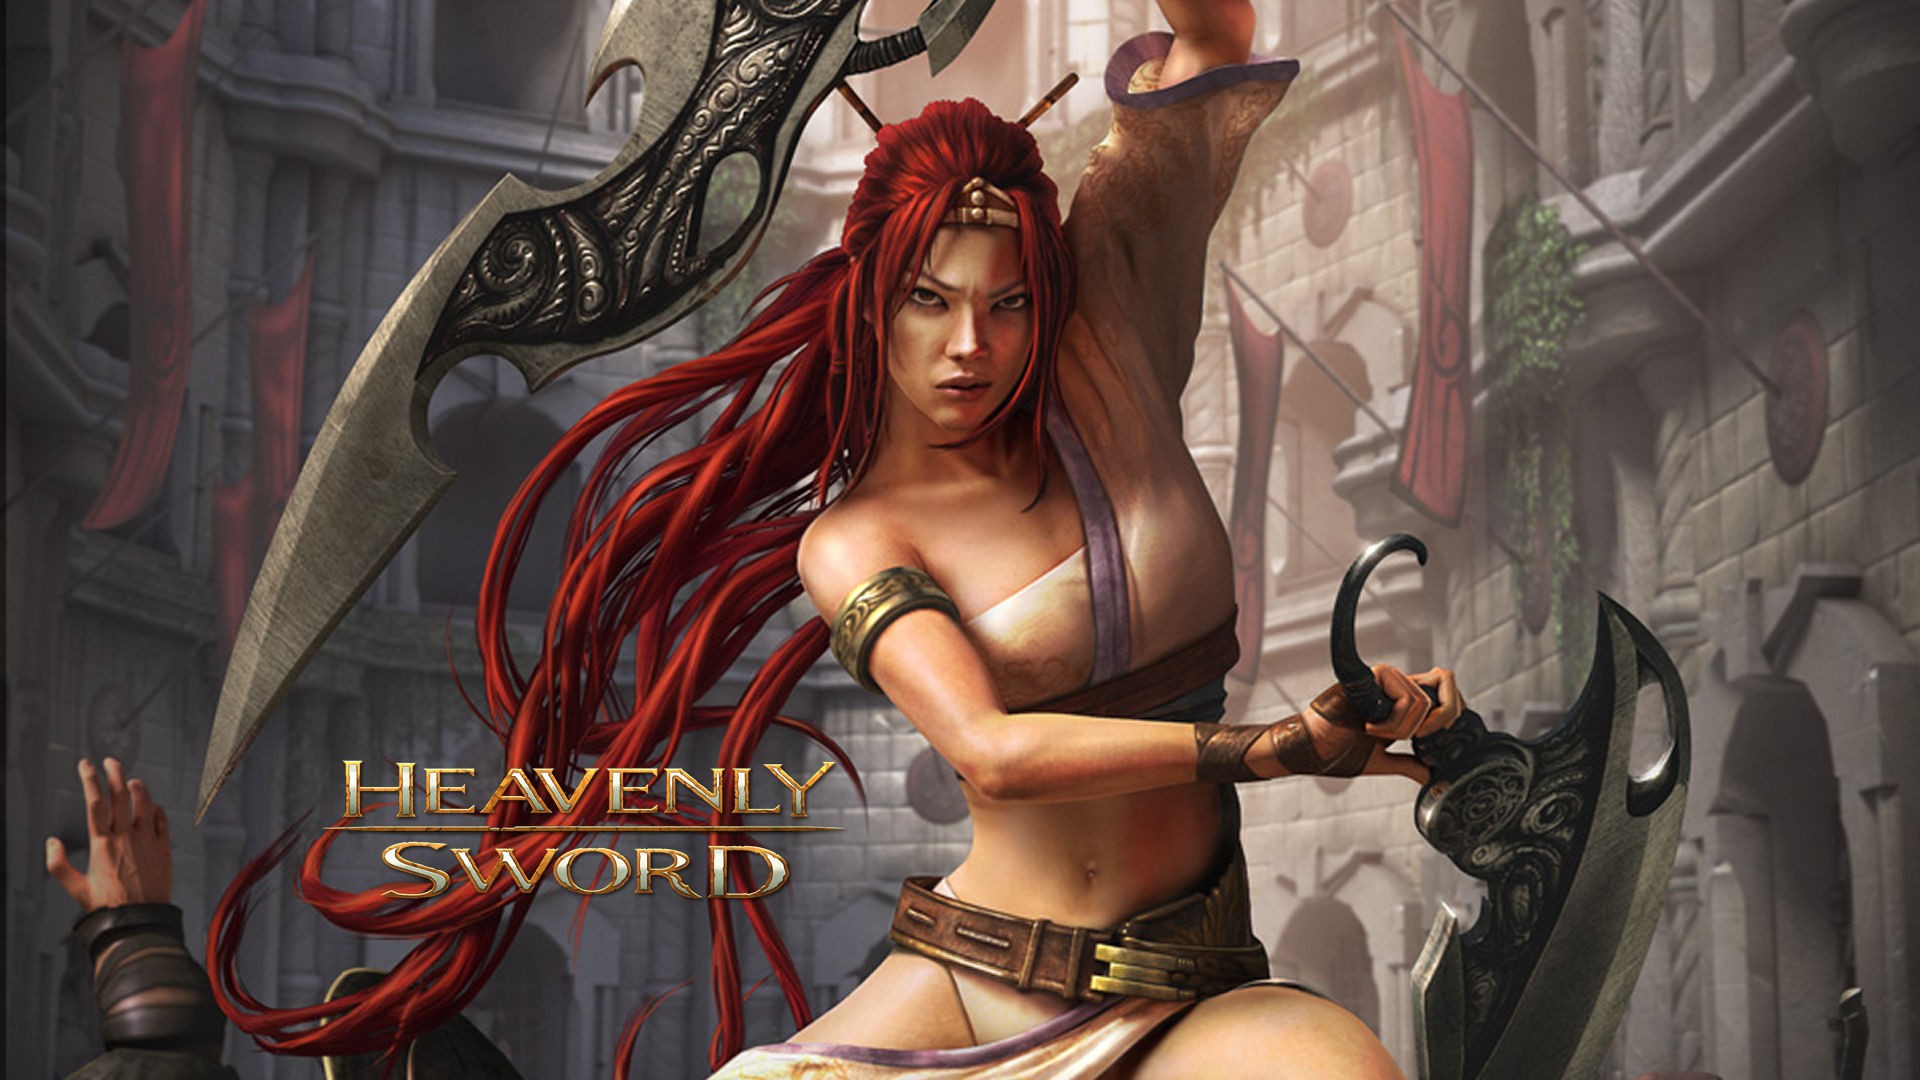 General 1920x1080 video games fantasy girl redhead long hair Heavenly Sword video game art women with swords belly fantasy art warrior video game girls